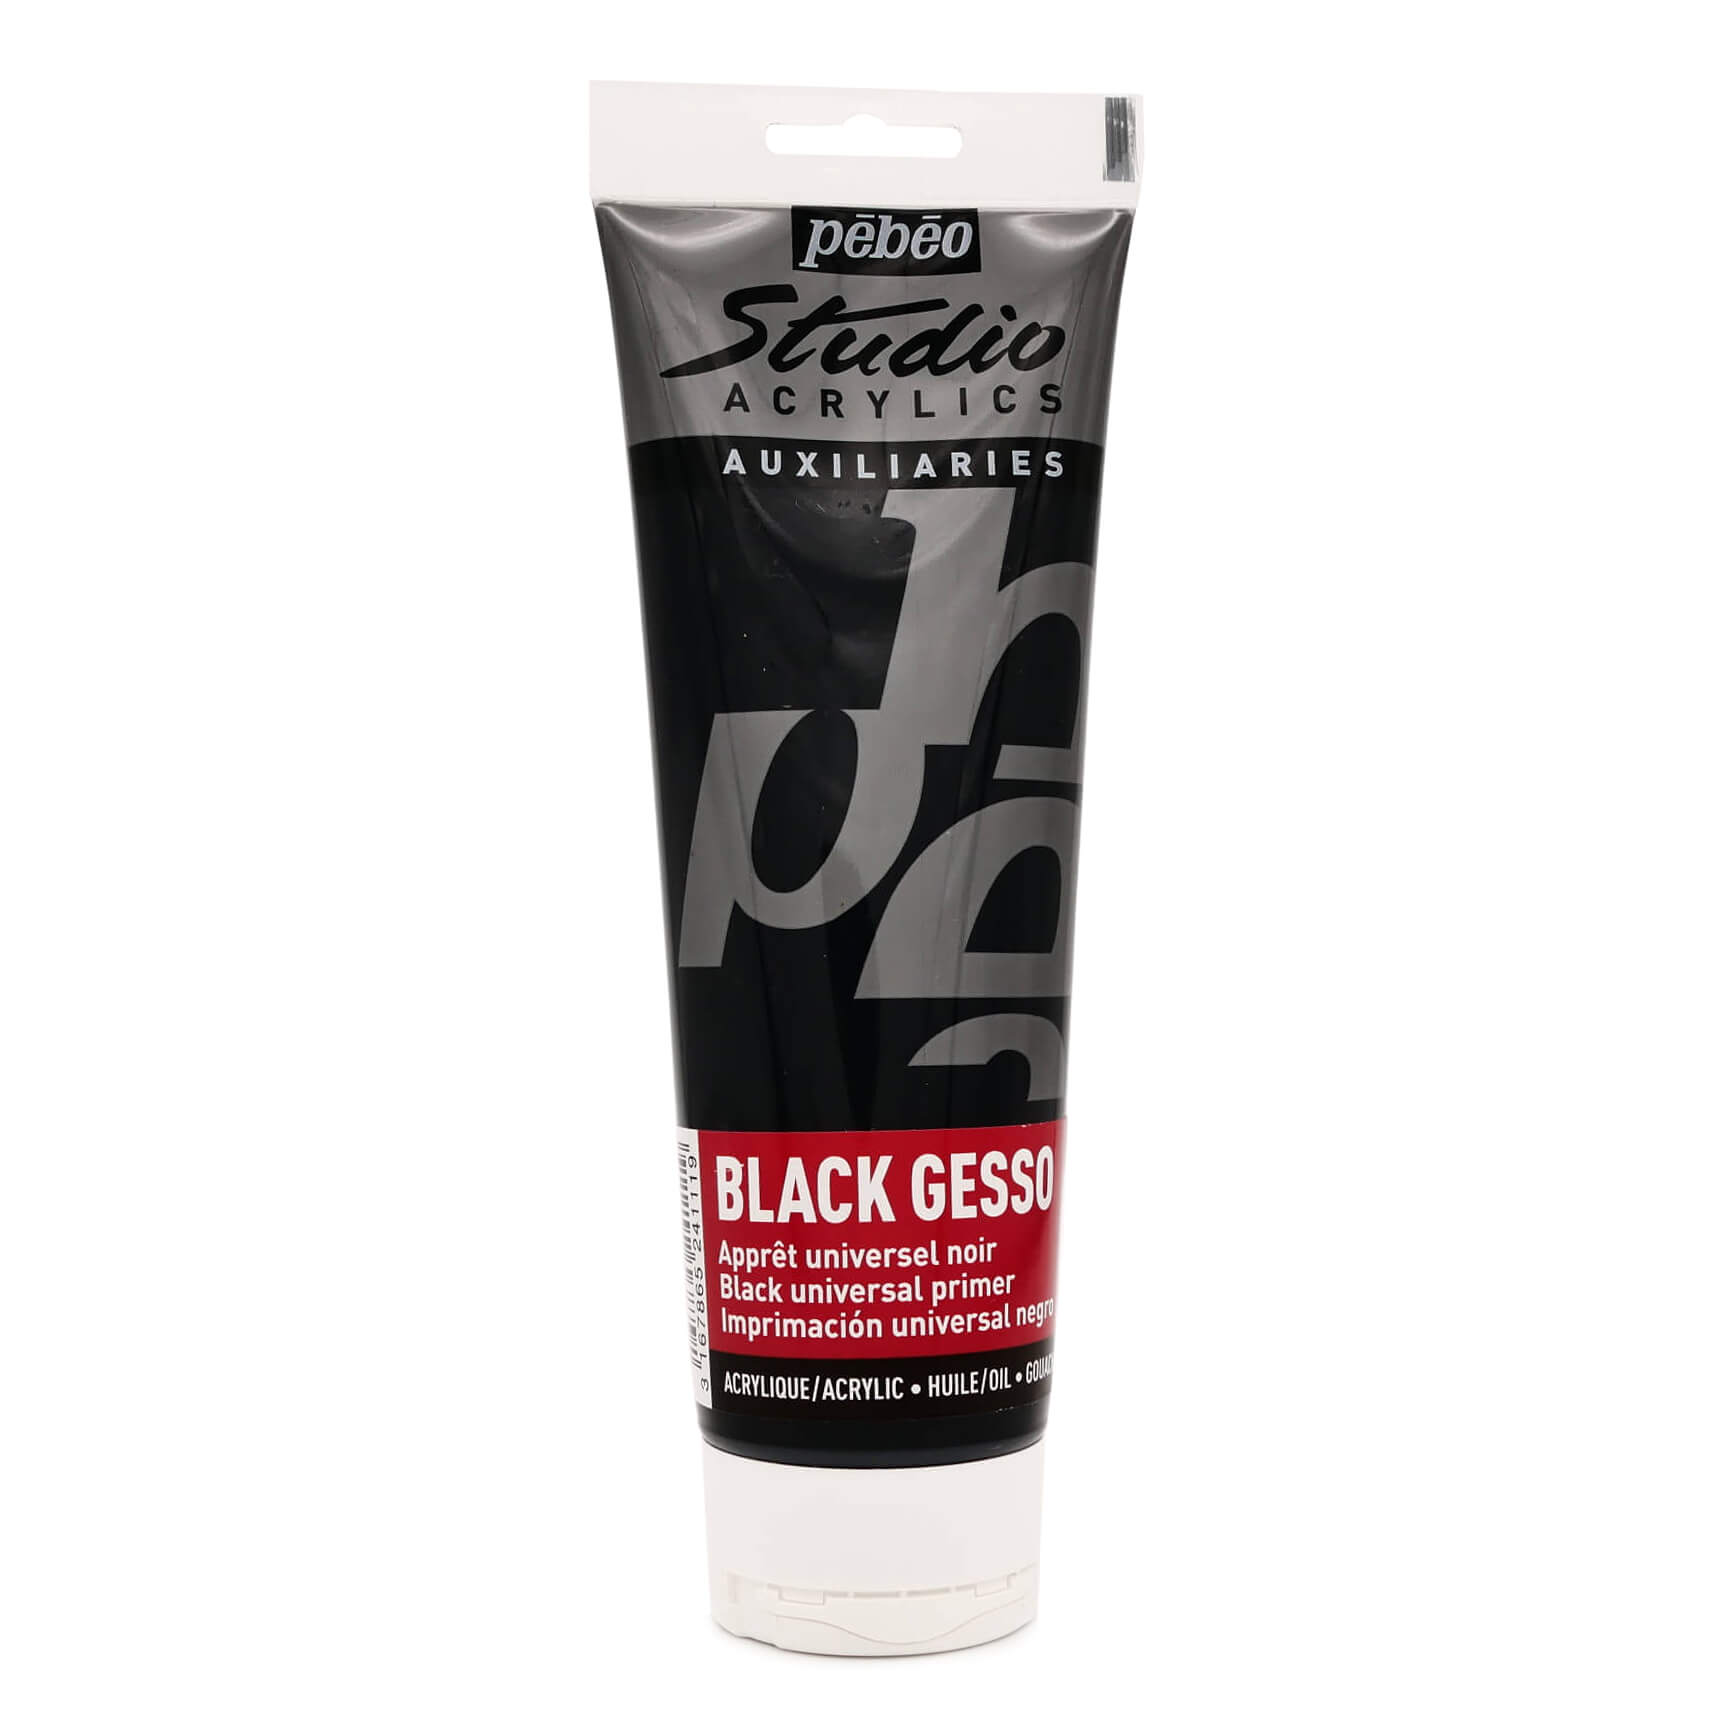 Pebeo 500 ml Studio Acrylics Auxiliaries Gesso, Black